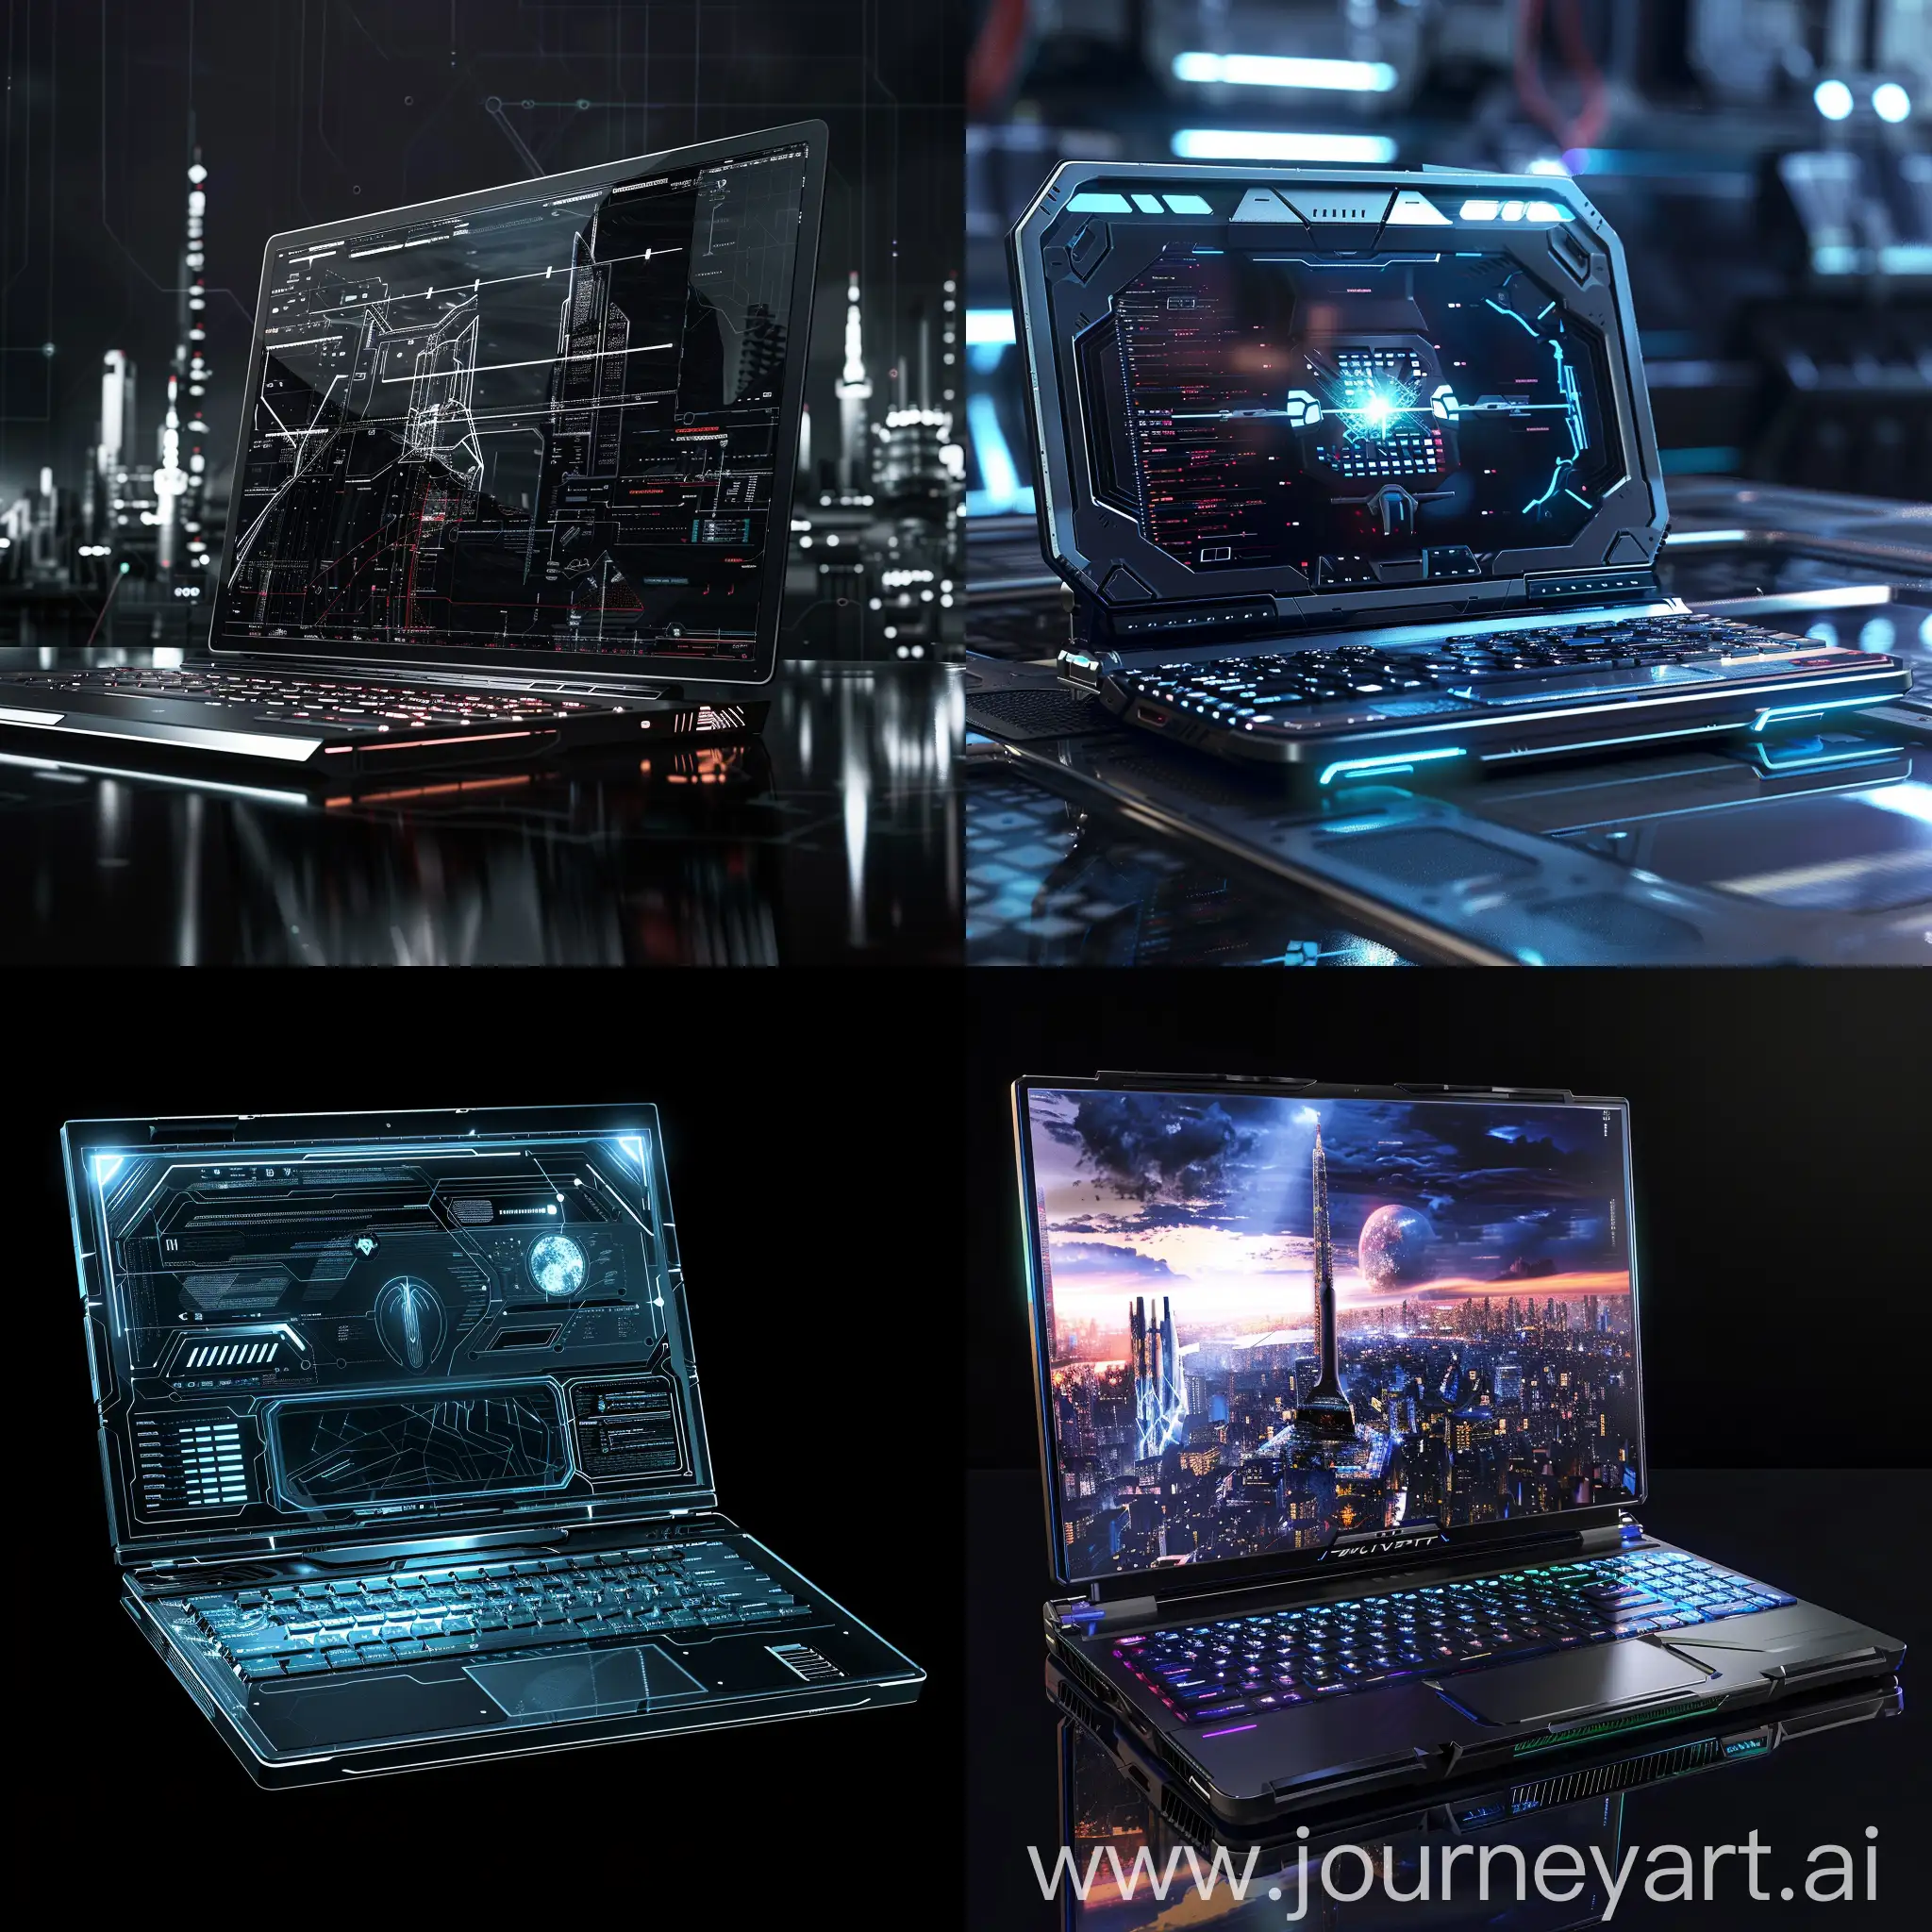 Futuristic-Utopian-Laptop-in-Cinematic-Style